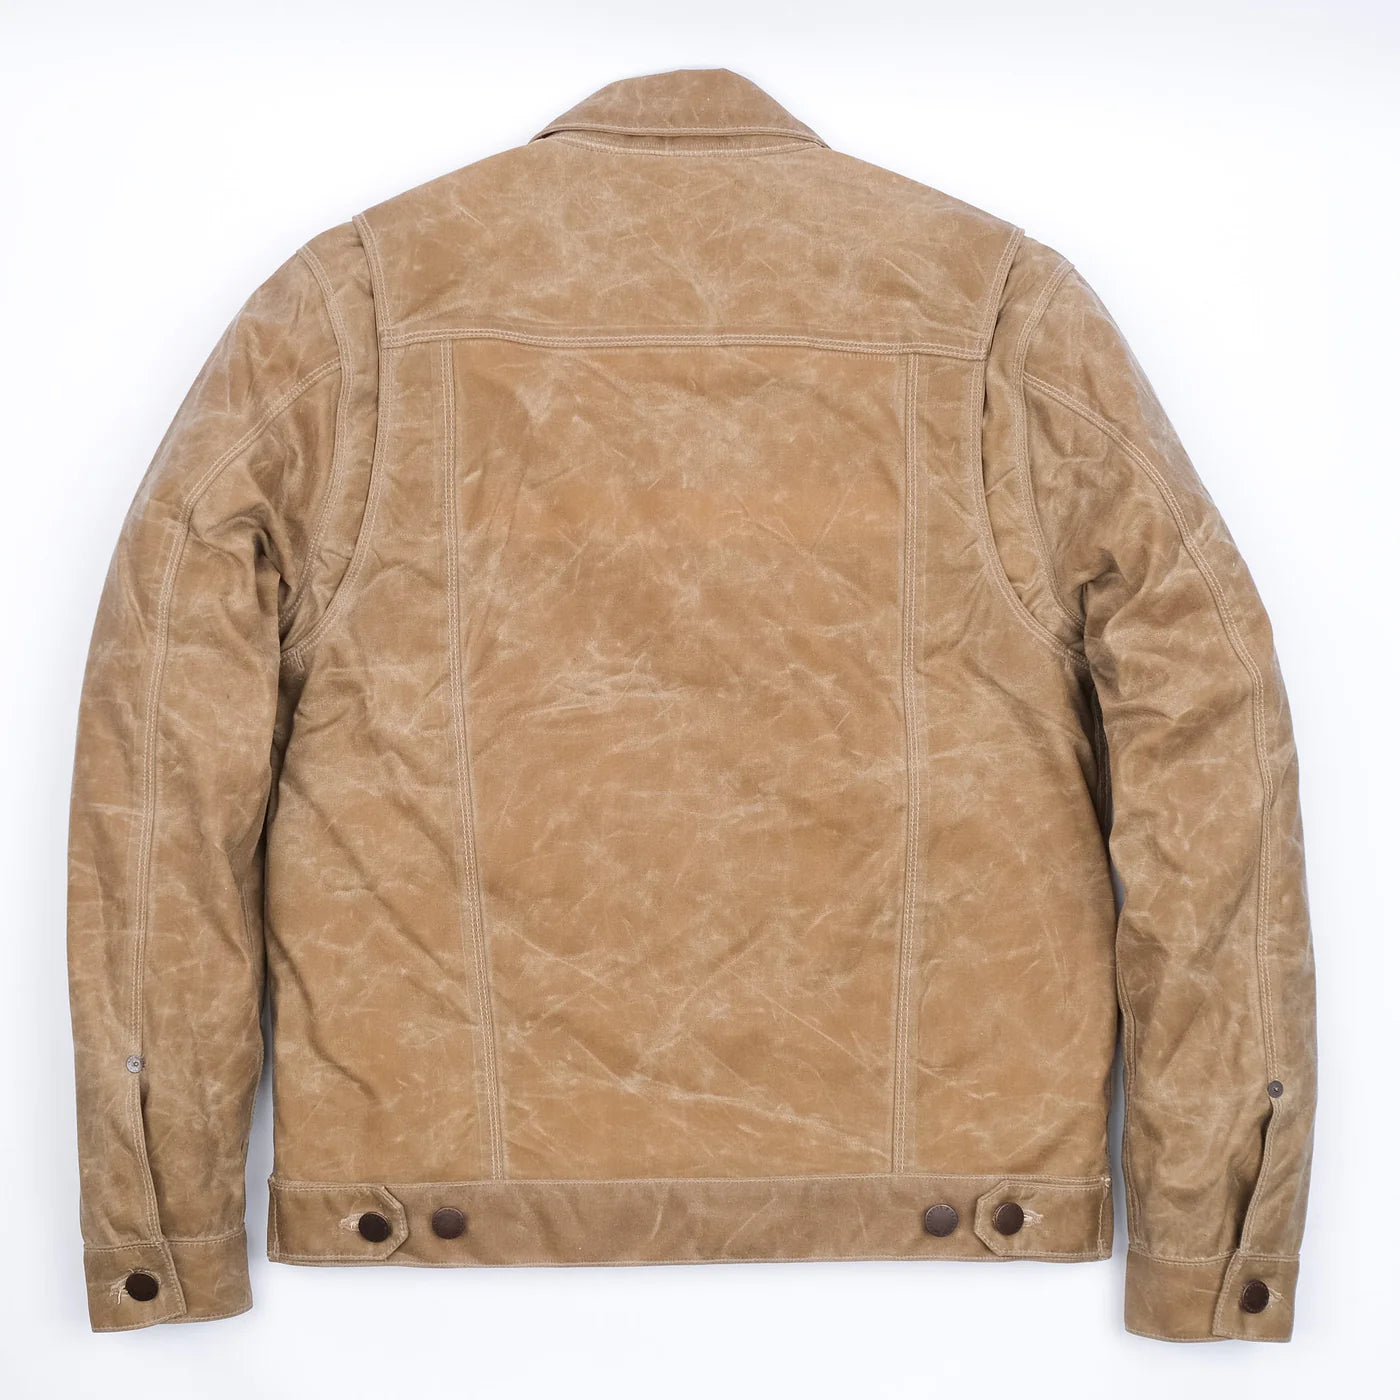 Freenote Cloth Riders Jacket in Tumbleweed Waxed Canvas